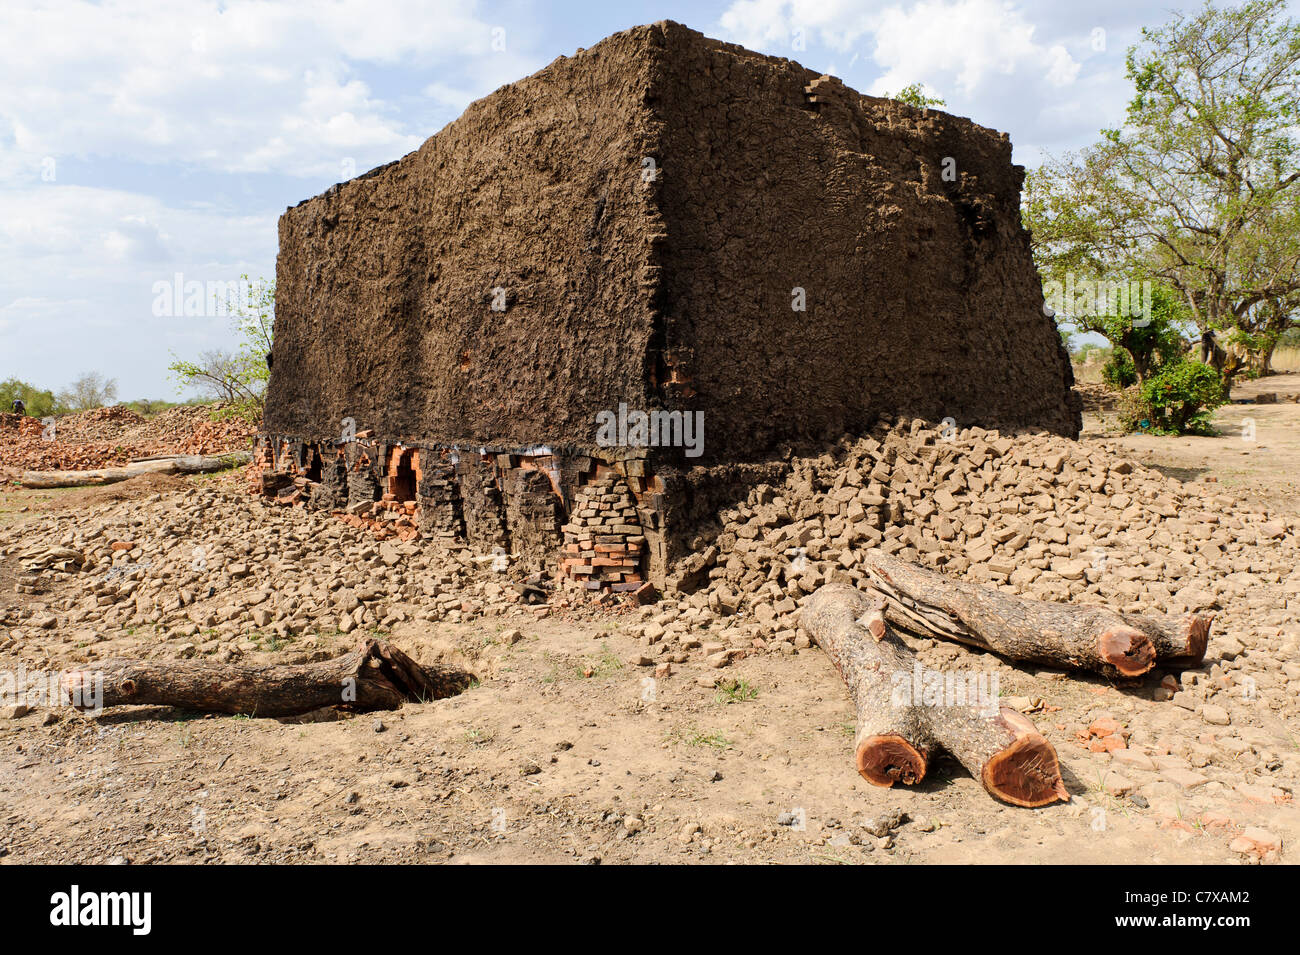 Bricks being manufactured, Wau, Bahr el Ghazal, South Sudan. Stock Photo